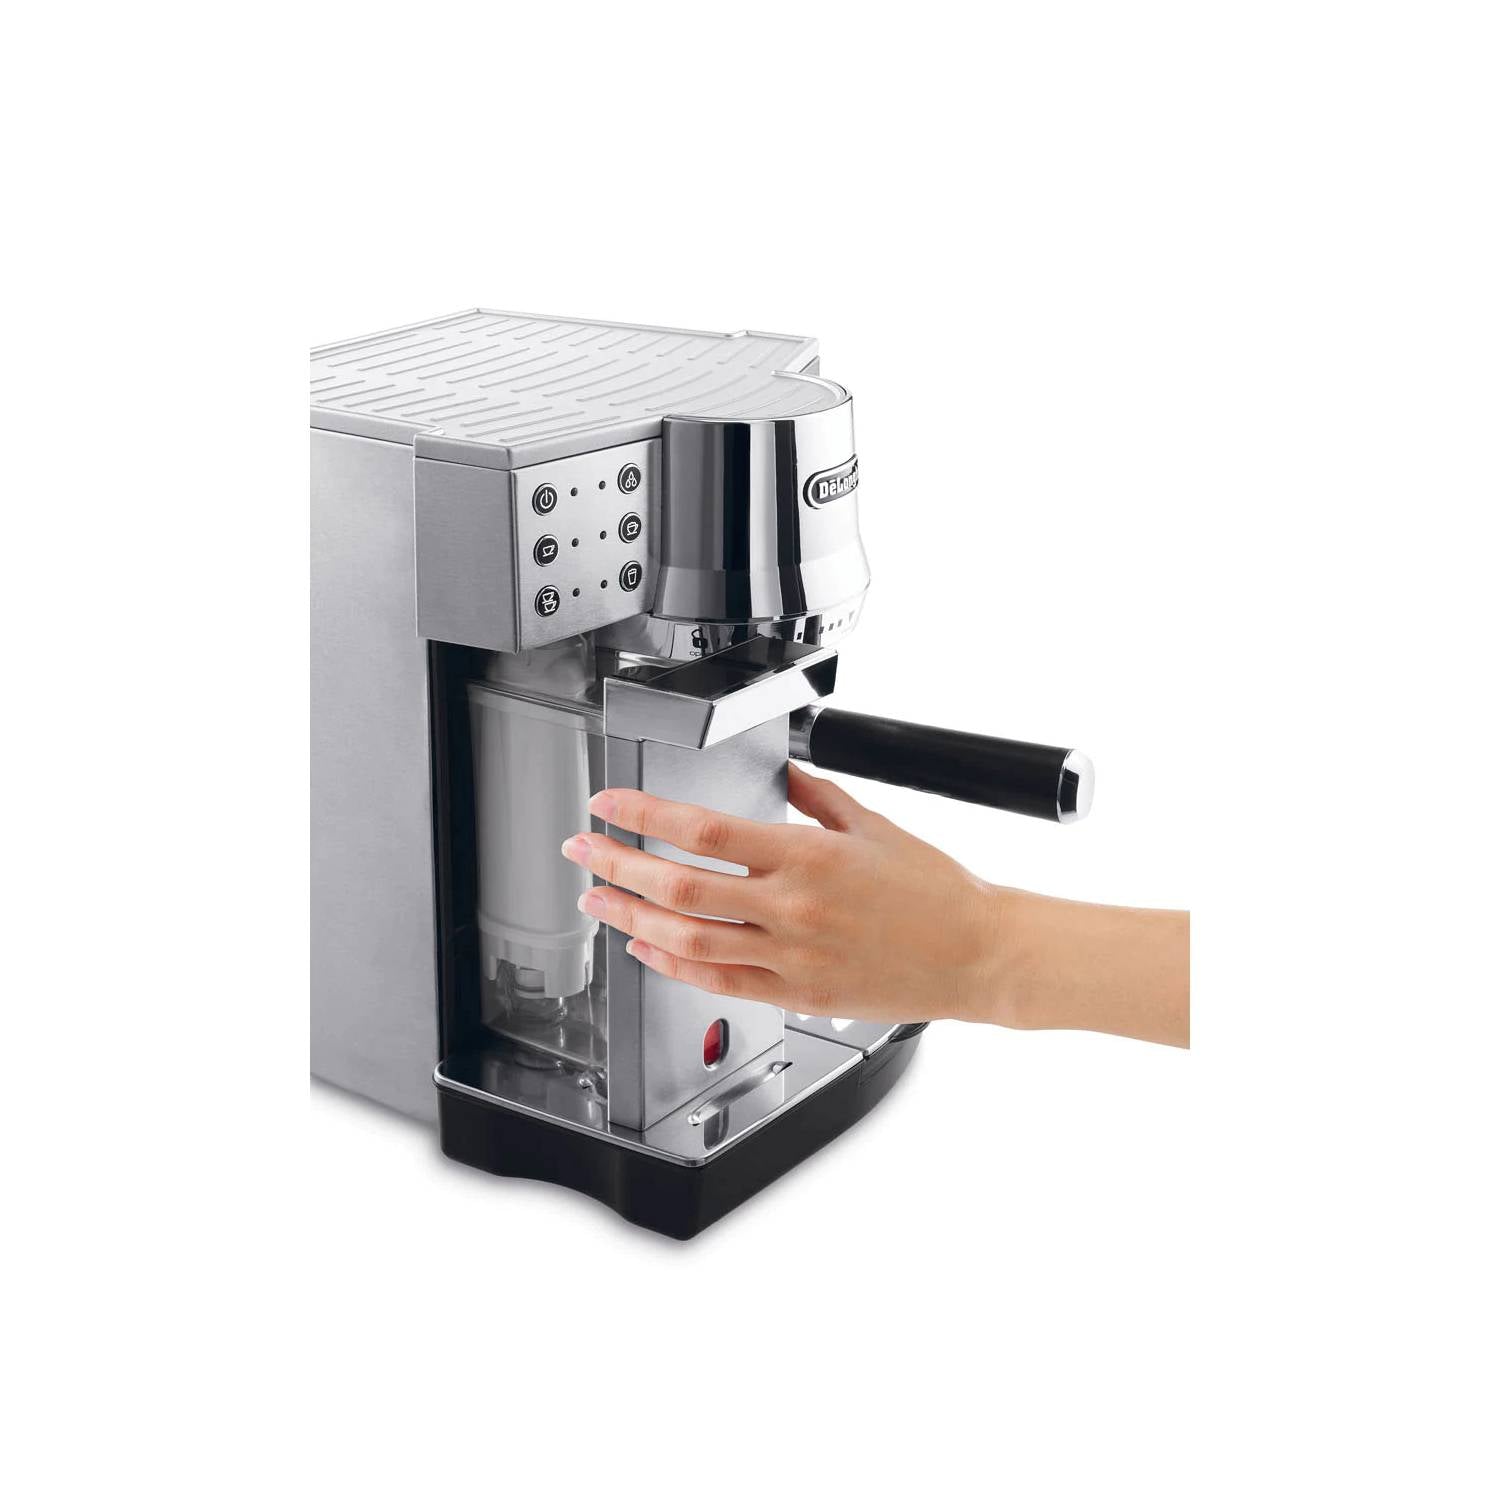 Delonghi EC 850.M Coffee Machine